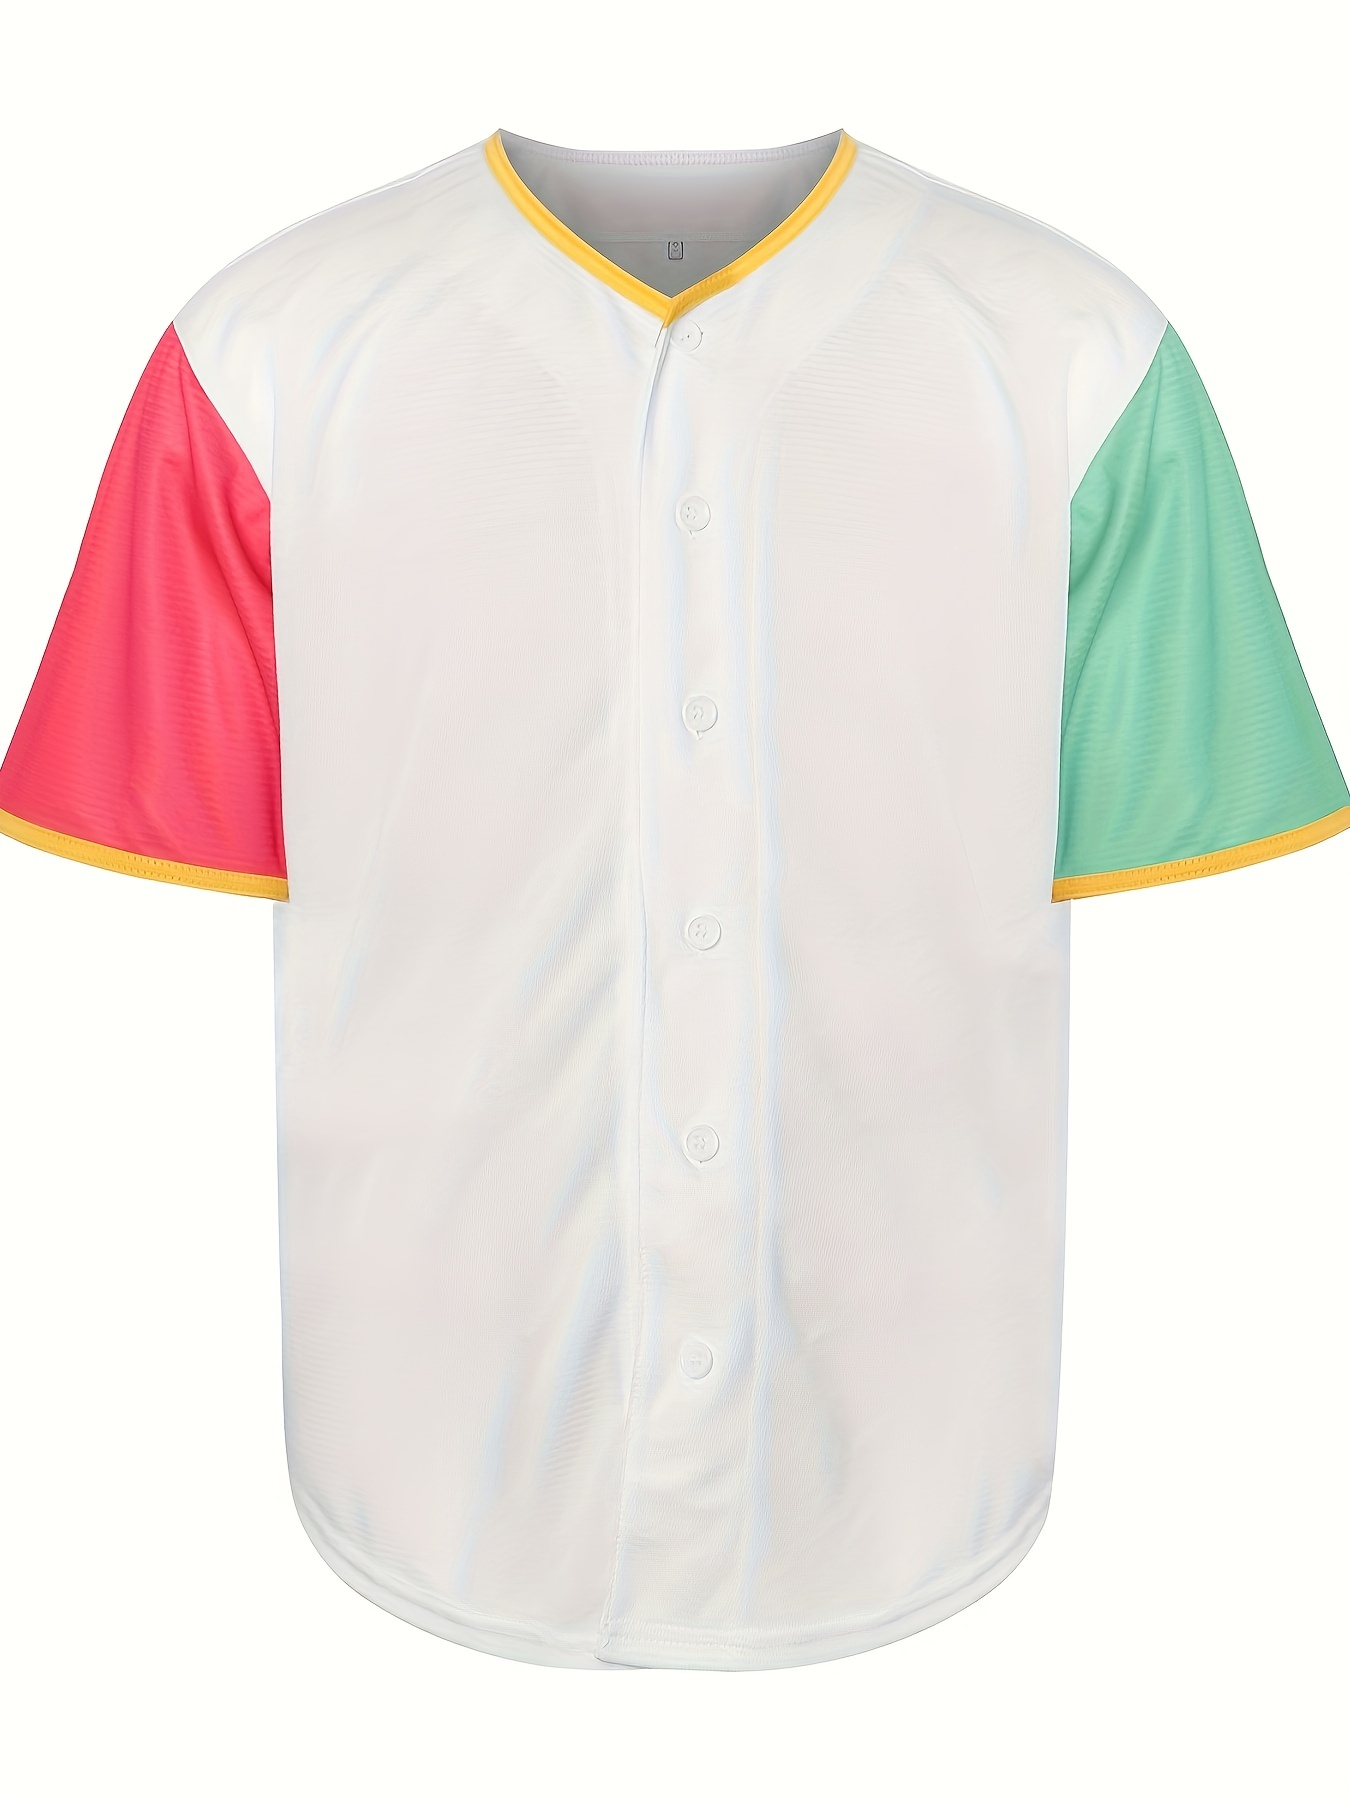 Men's Classic Design Color Block Baseball Jersey, Retro Baseball